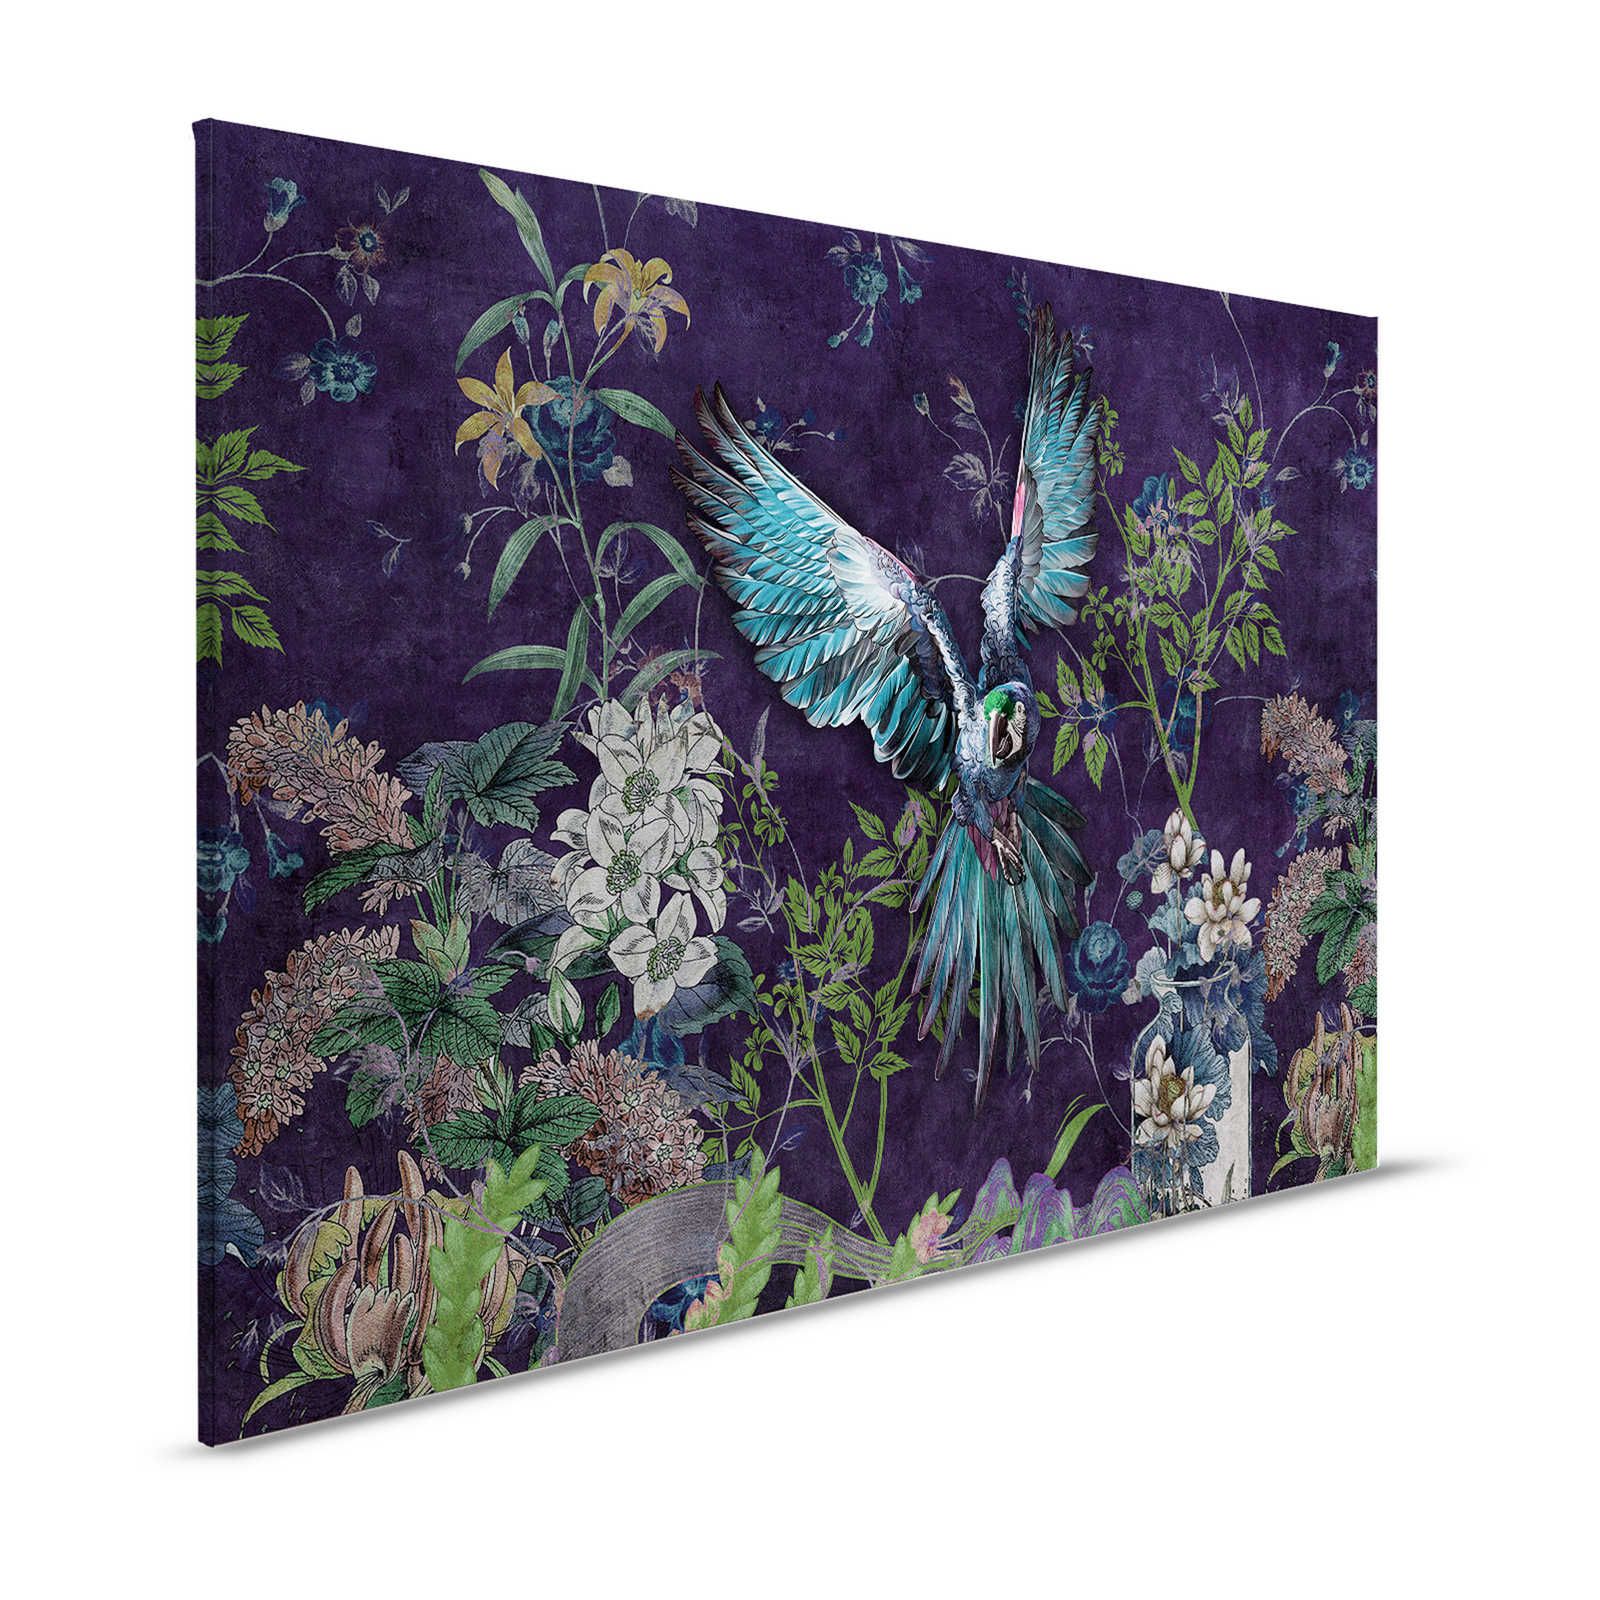 Tropical Hero 2 - Lienzo Loro pintando Flores y Fondo Negro - 1.20 m x 0.80 m
